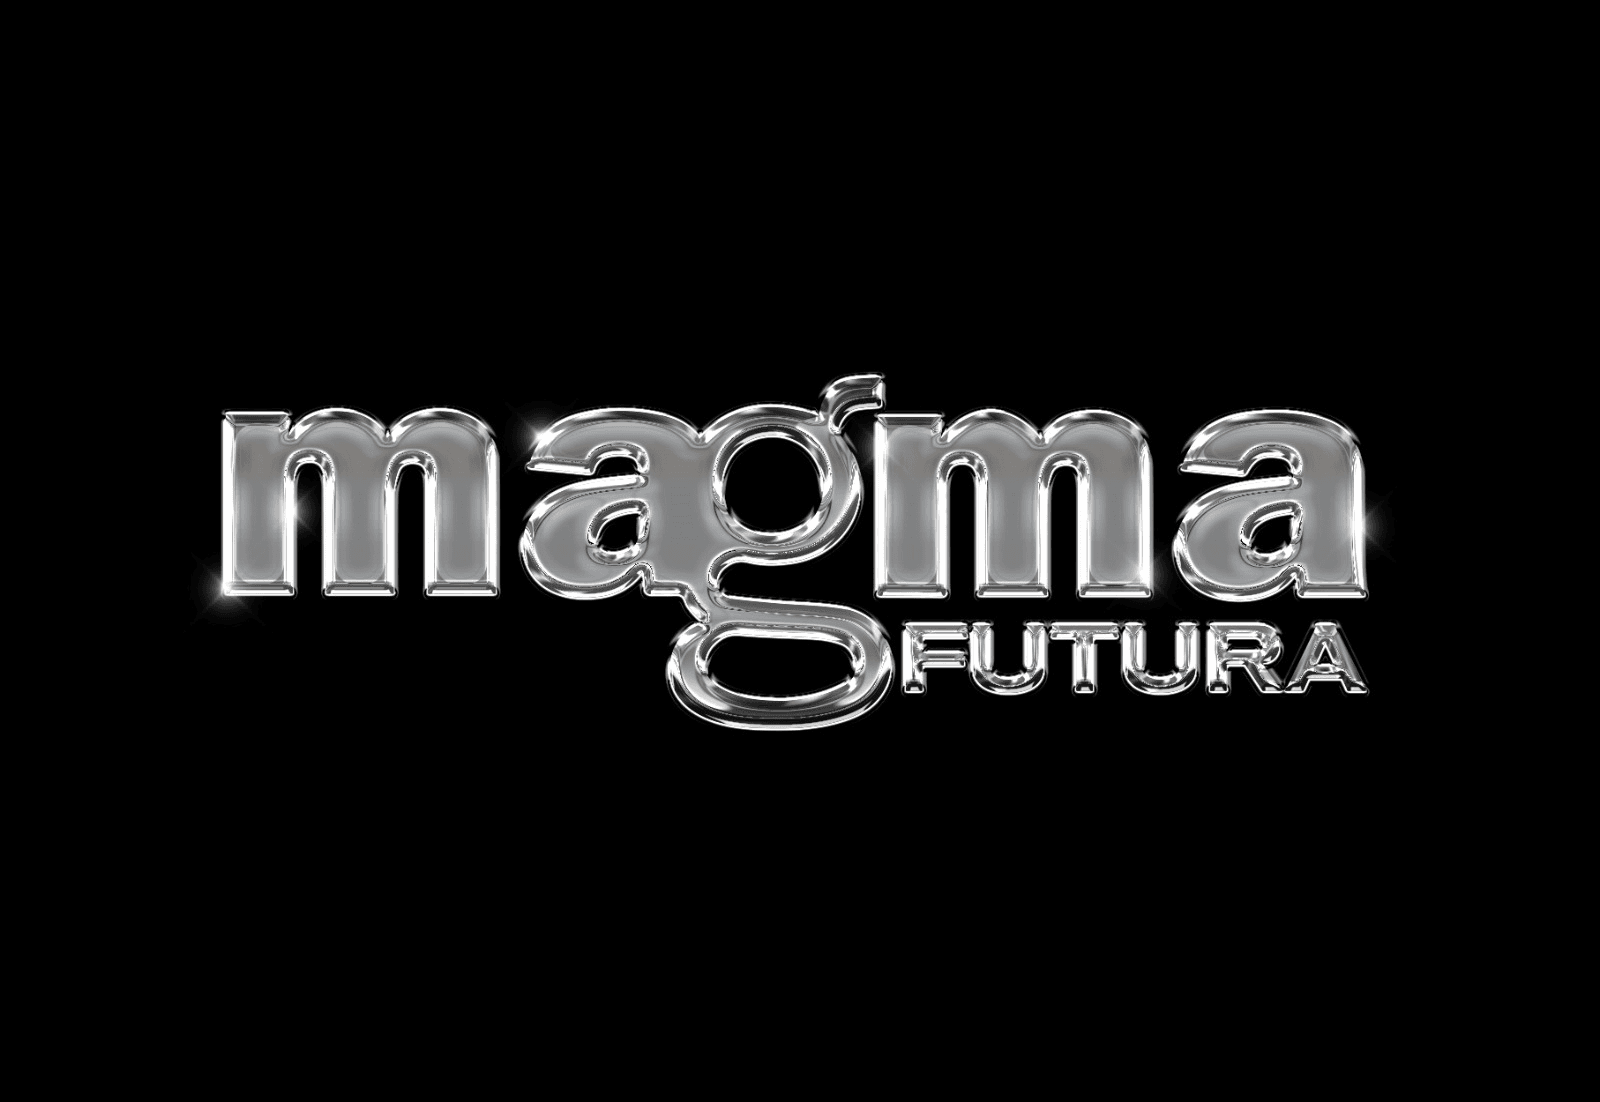 Magma Futura Loyalty